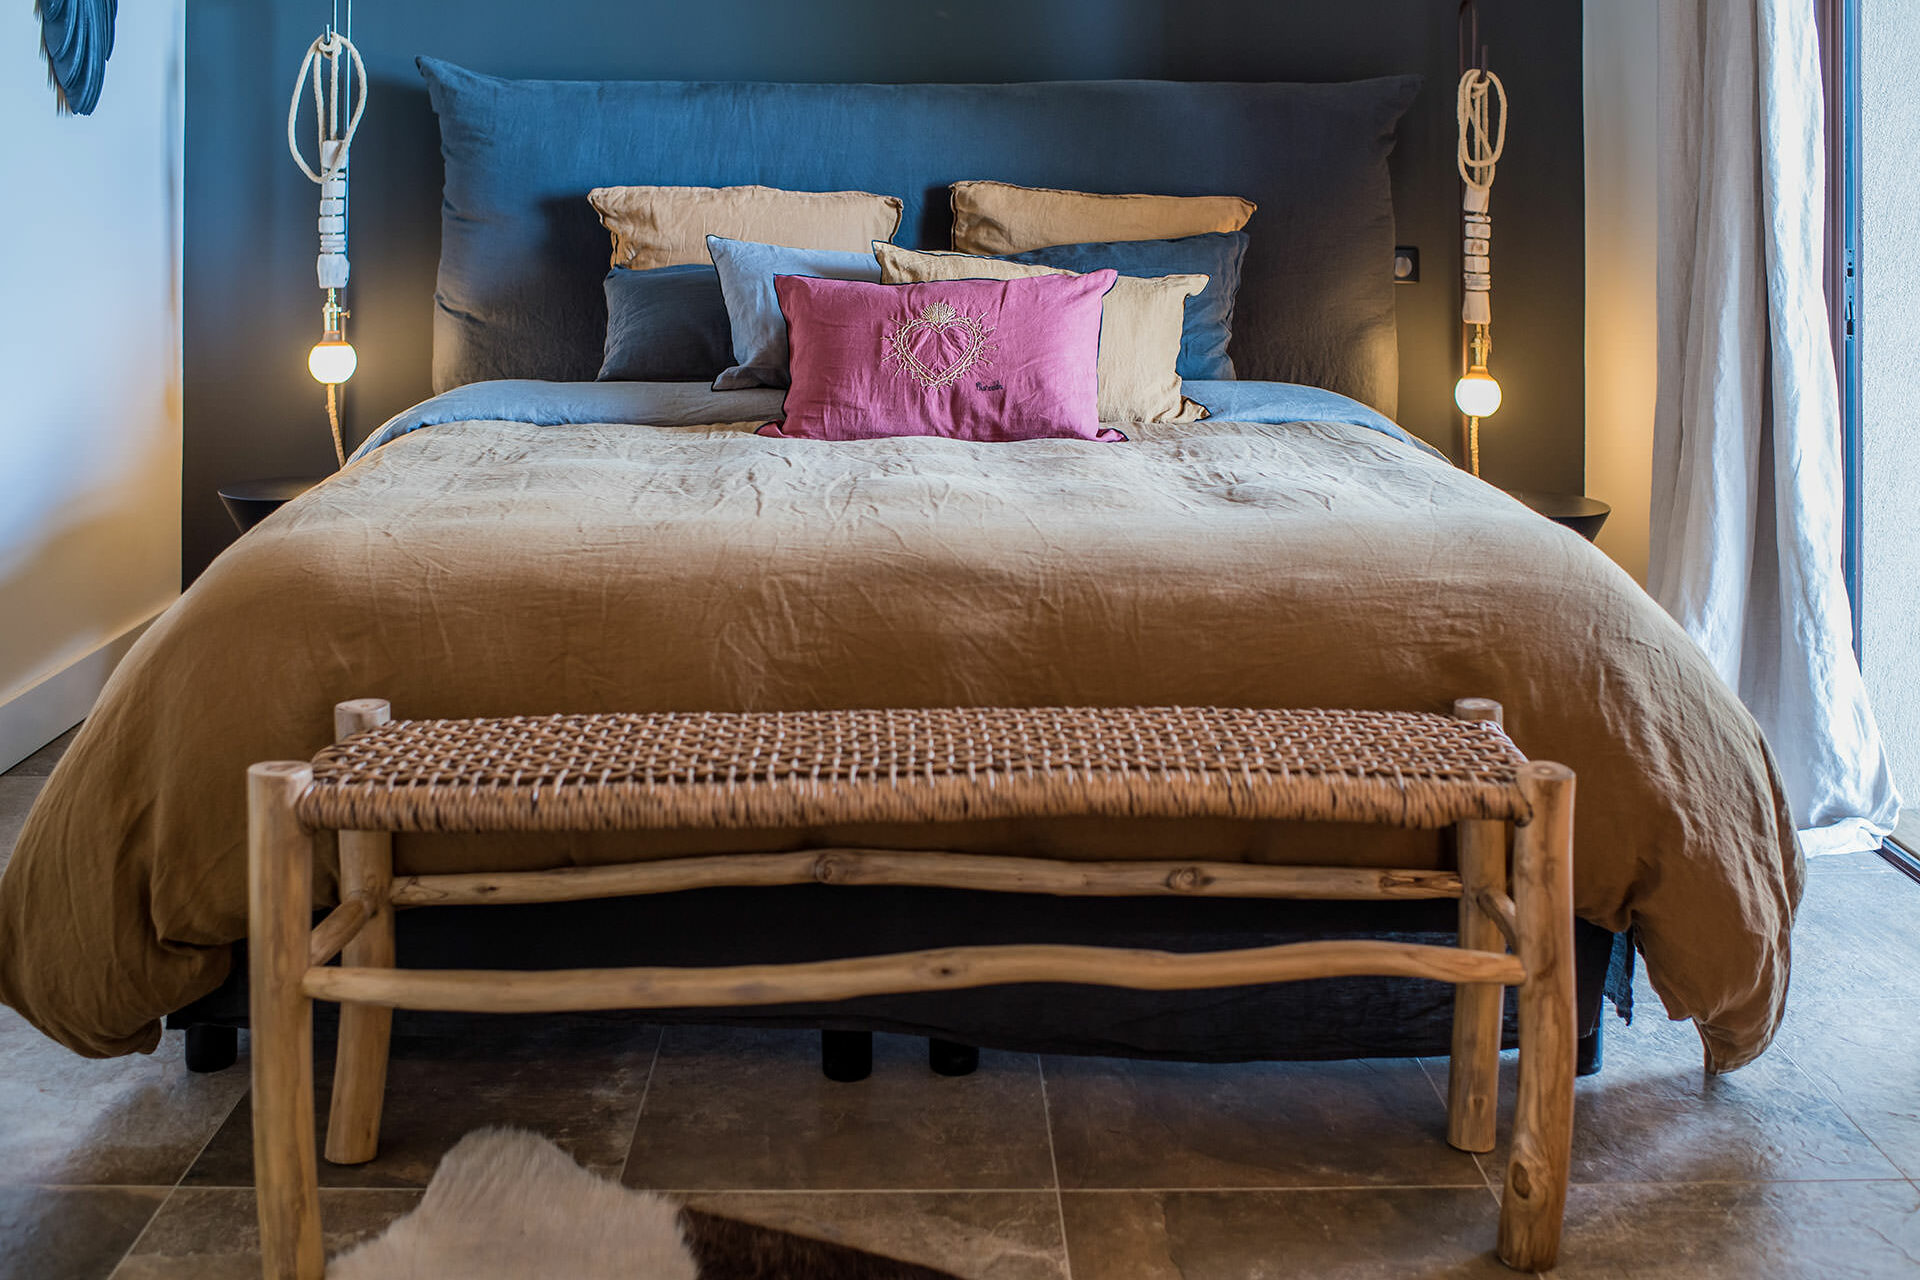 Hébergement en chambres d'hôtes Corse, chambre Muredda, linge lit en lin, baladeuses Mare&Luce